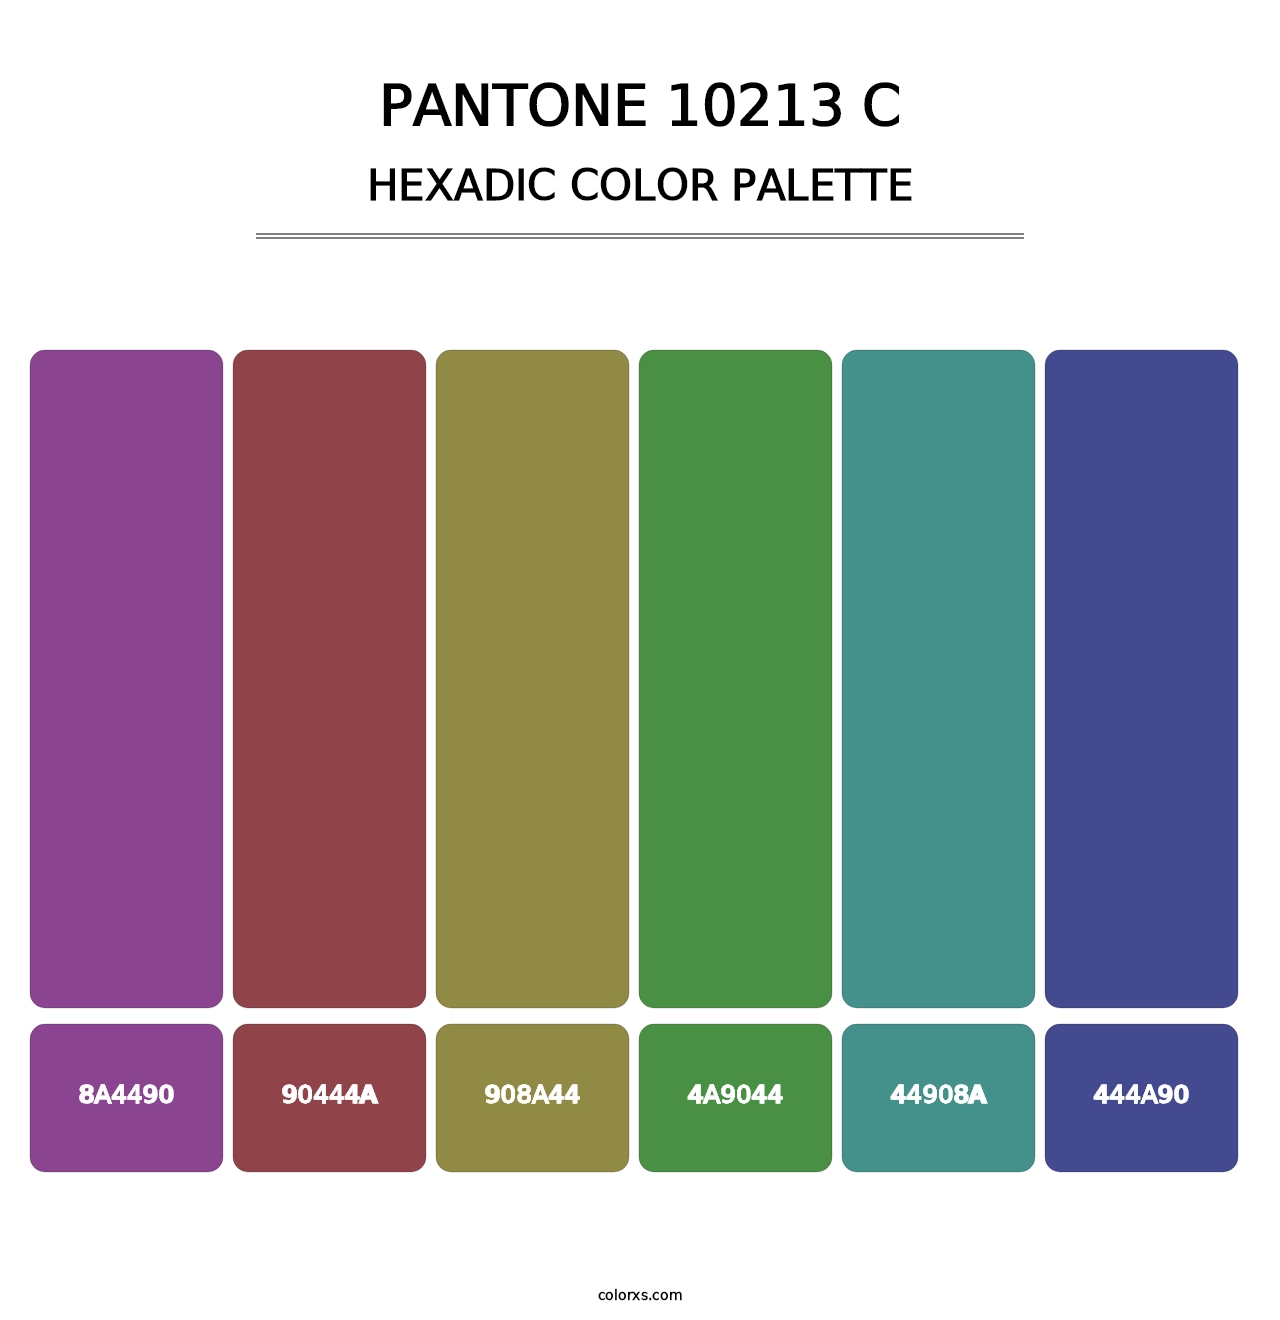 PANTONE 10213 C - Hexadic Color Palette